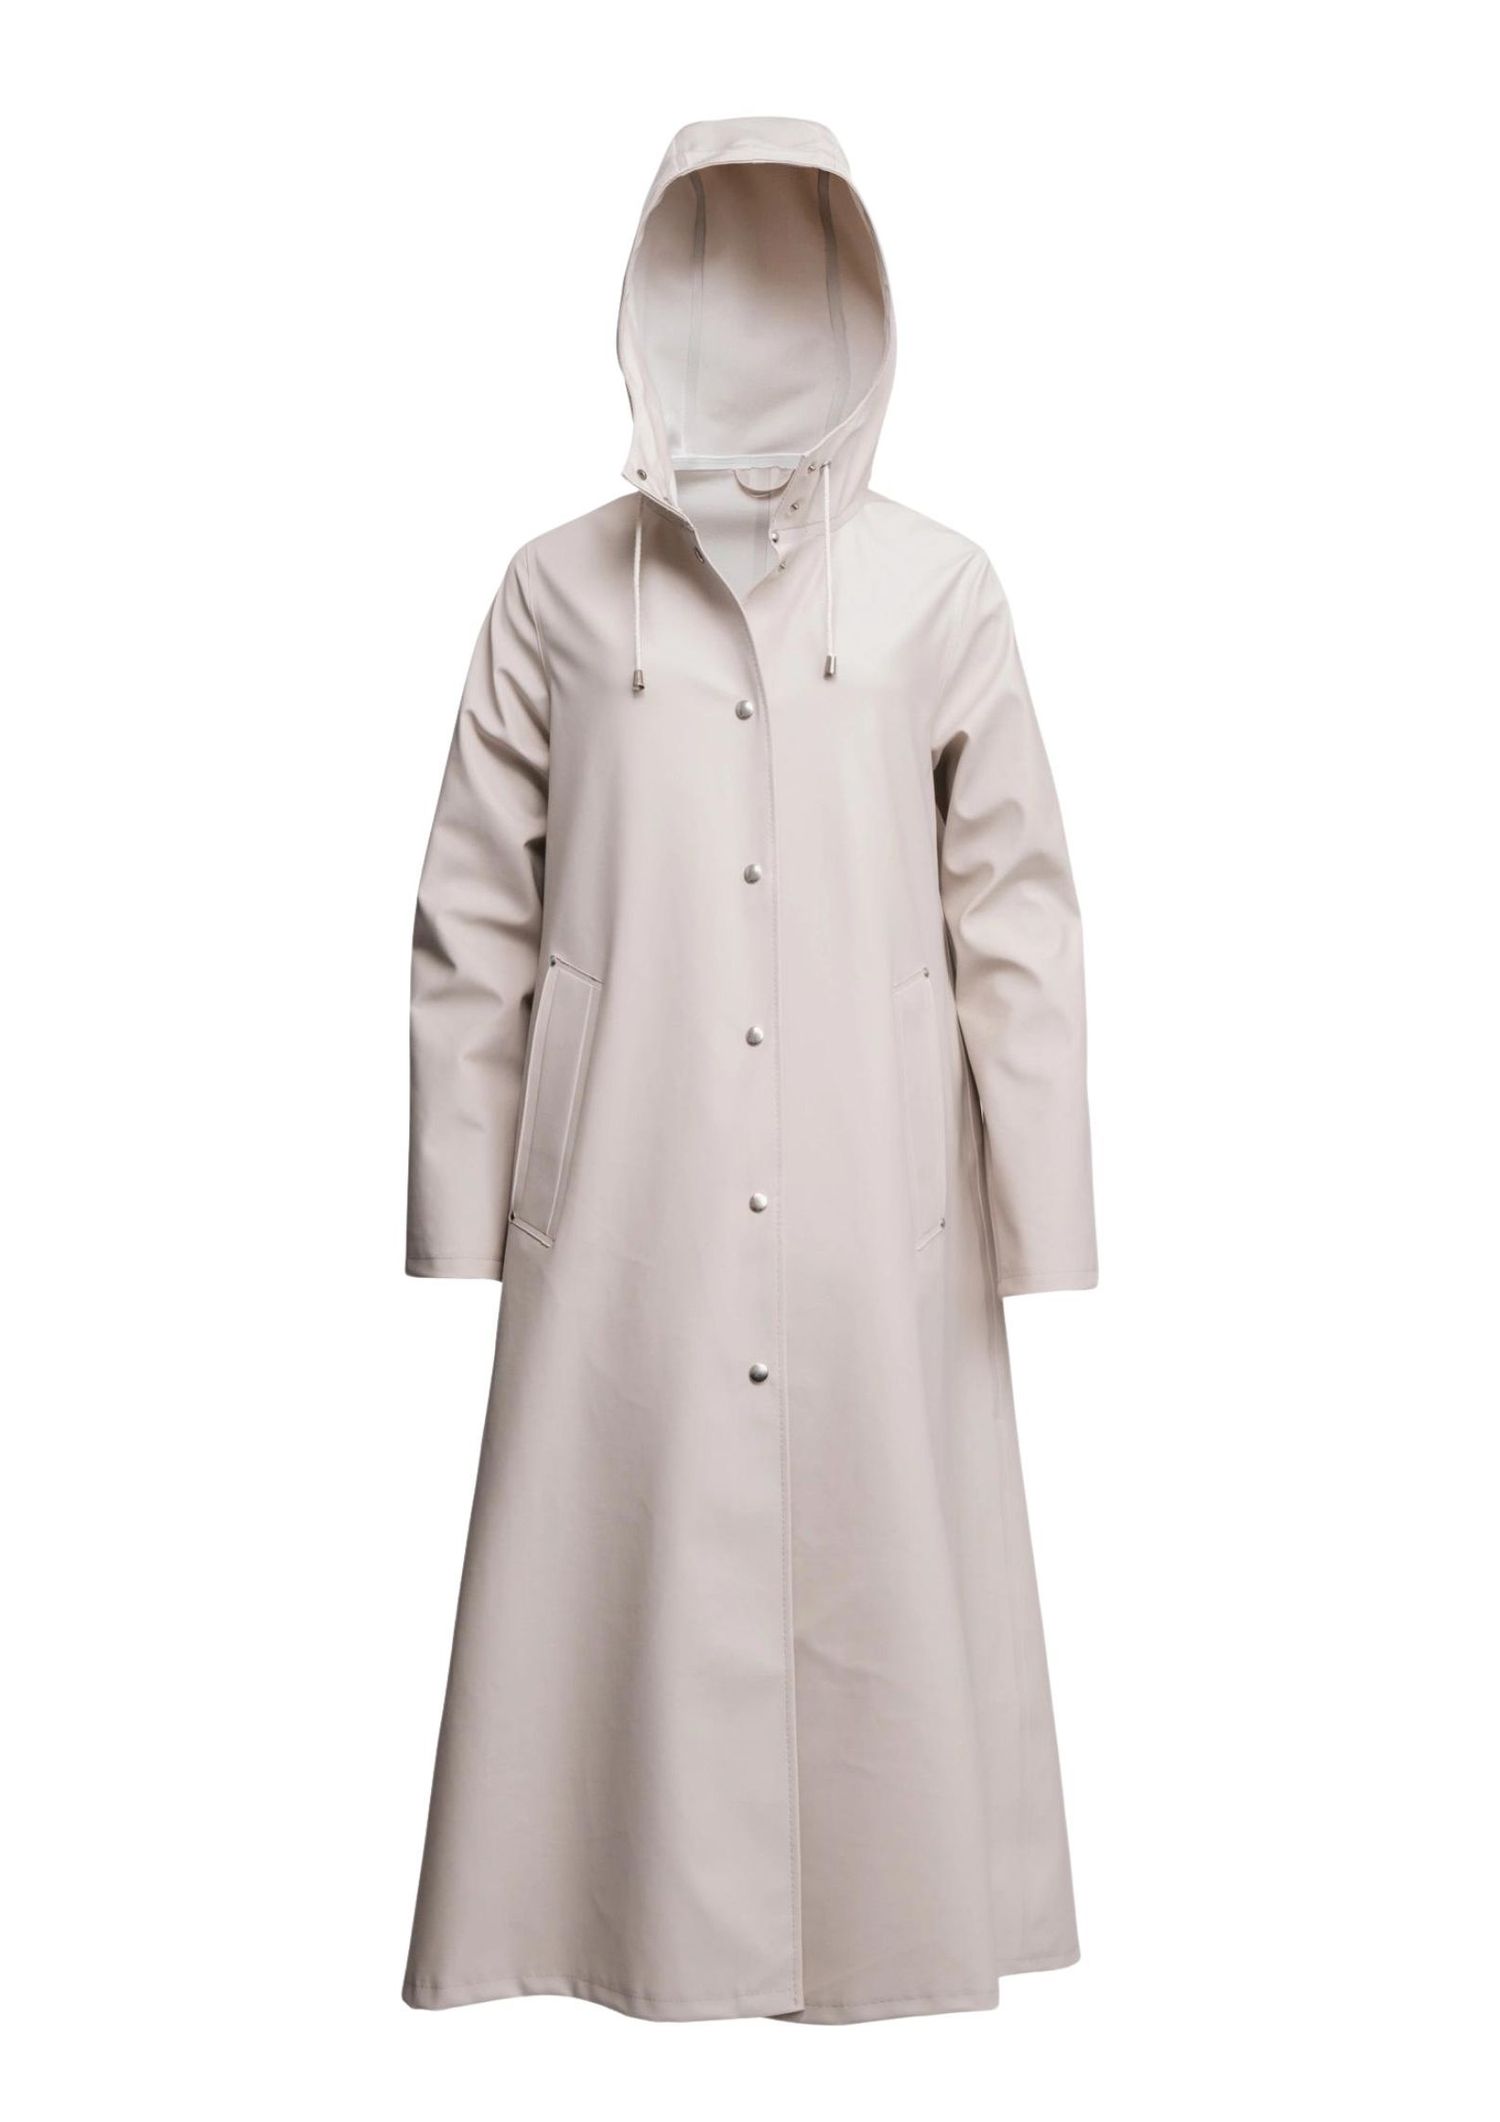 Zhuhaitf Outdoor Fashion Dots Waterproof Raincoat Unisex Portable Rainwear